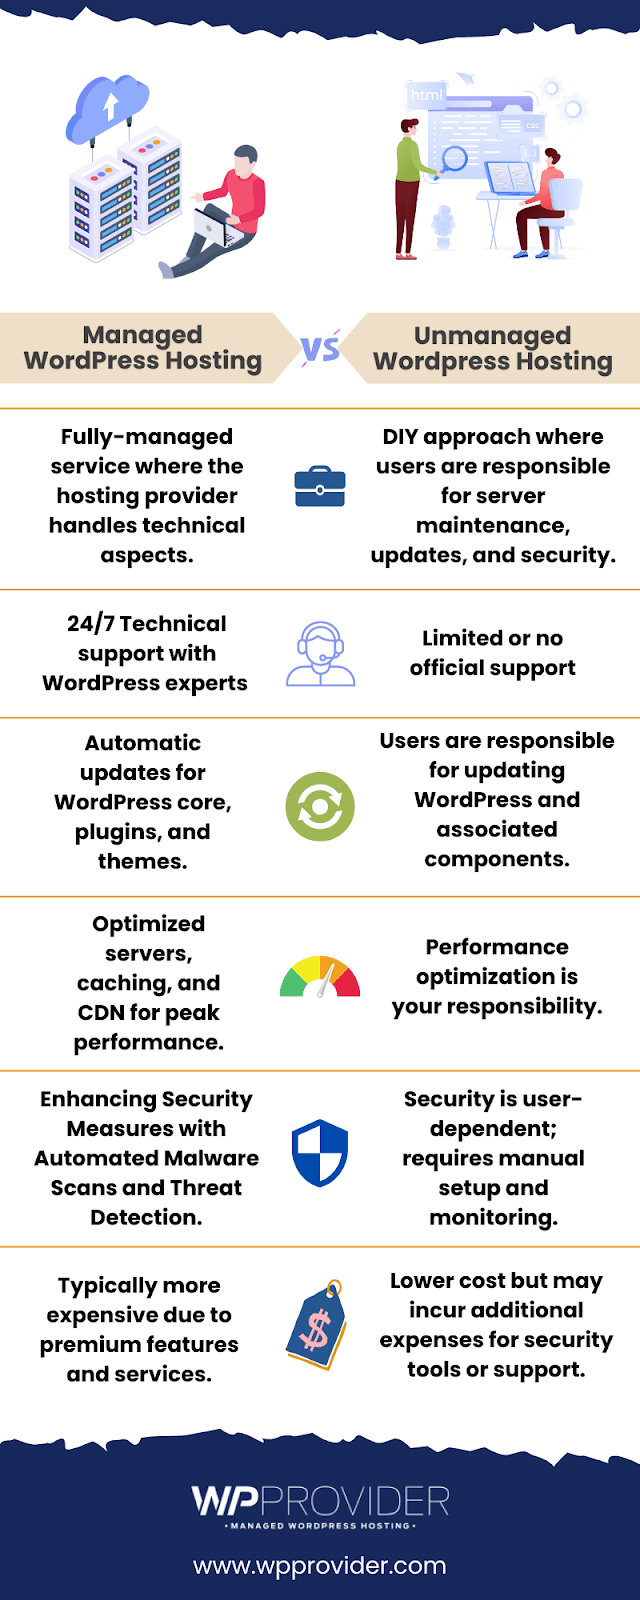 Managed WordPress Hosting versus Unmanaged WordPress Hosting Benefits Infographic